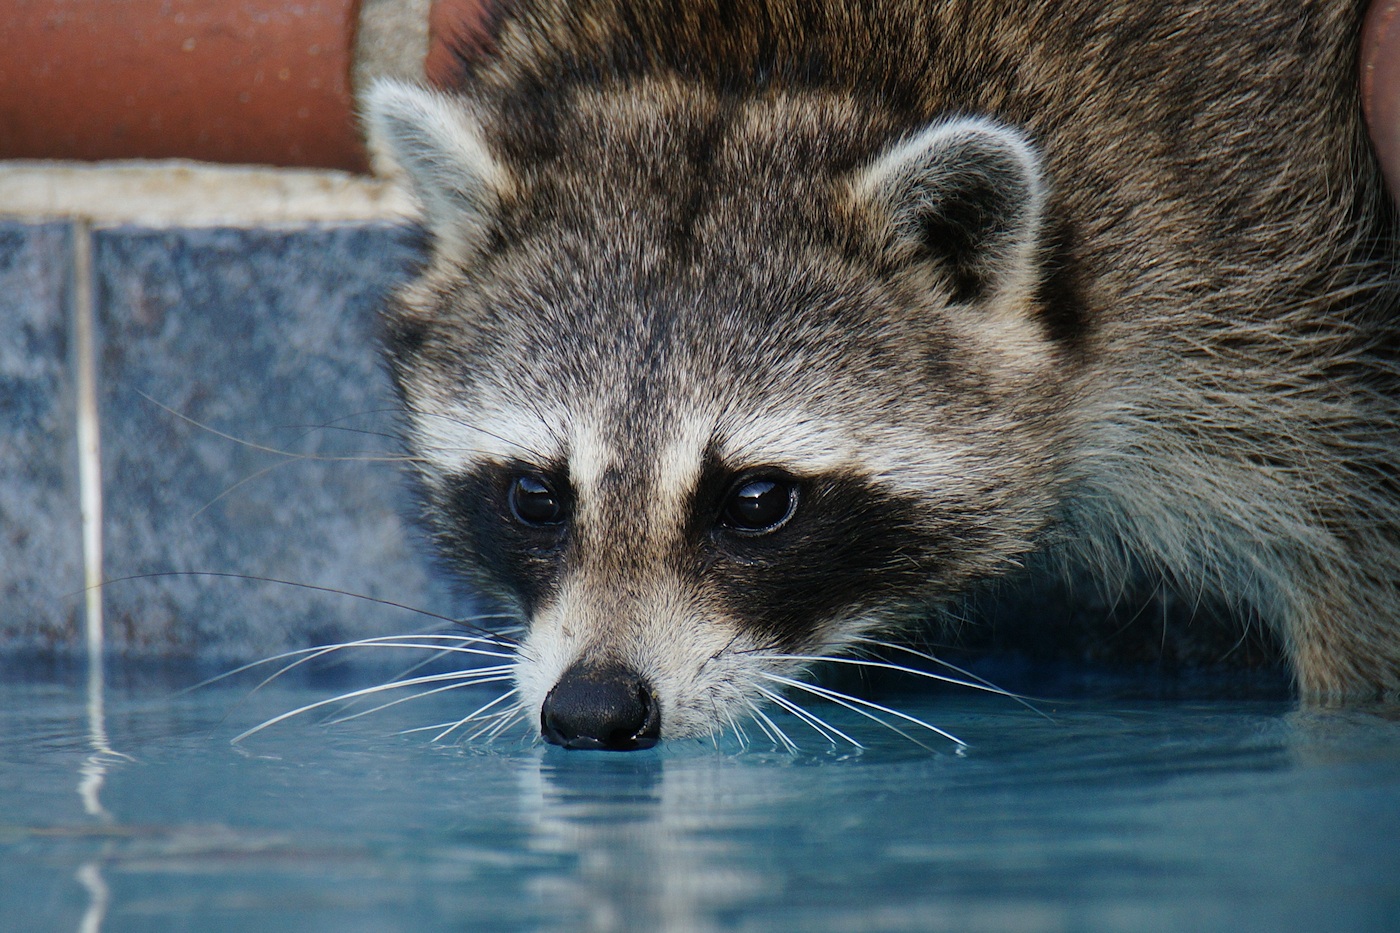 Raccoon closeup, having a drink